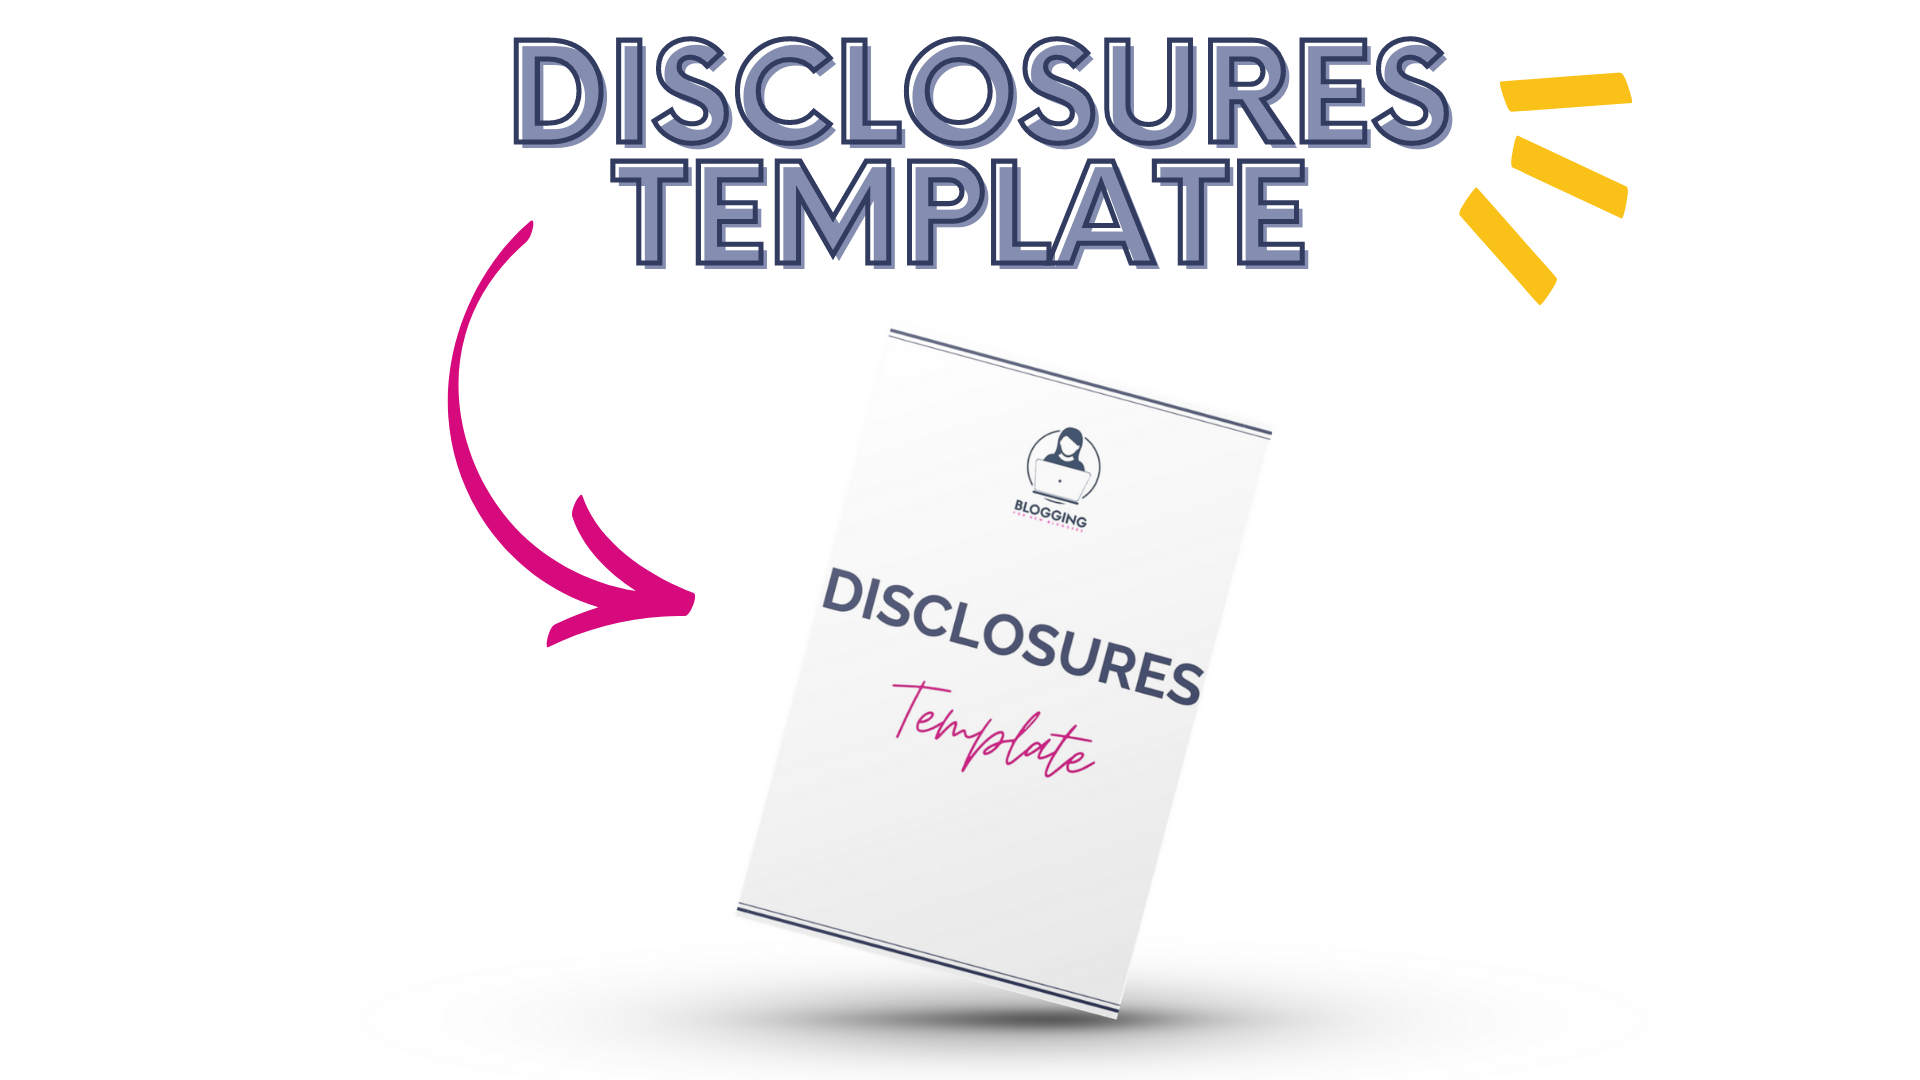 Disclosures template